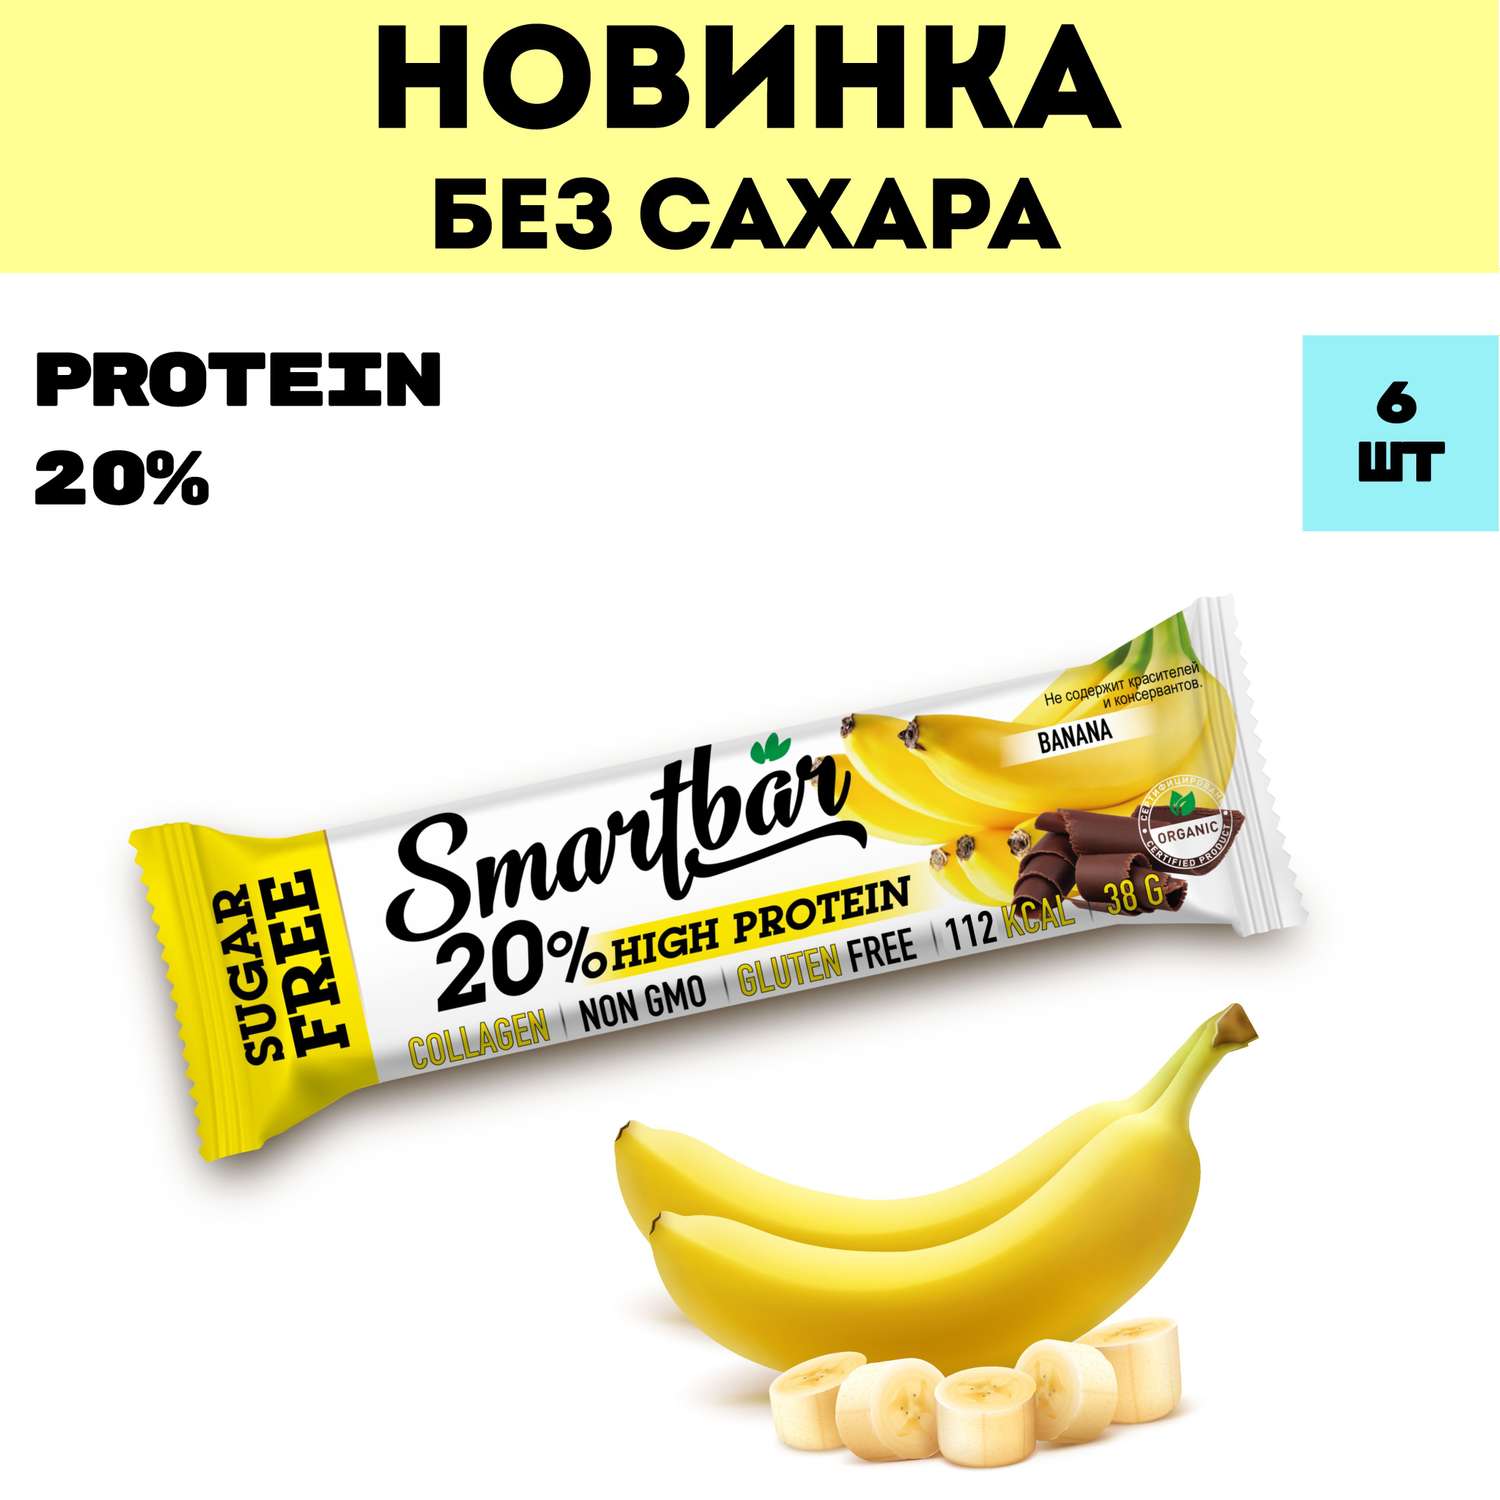 Протеиновые батончики Smartbar без сахара Банан в молочной глазури 6 штх 38г - фото 2